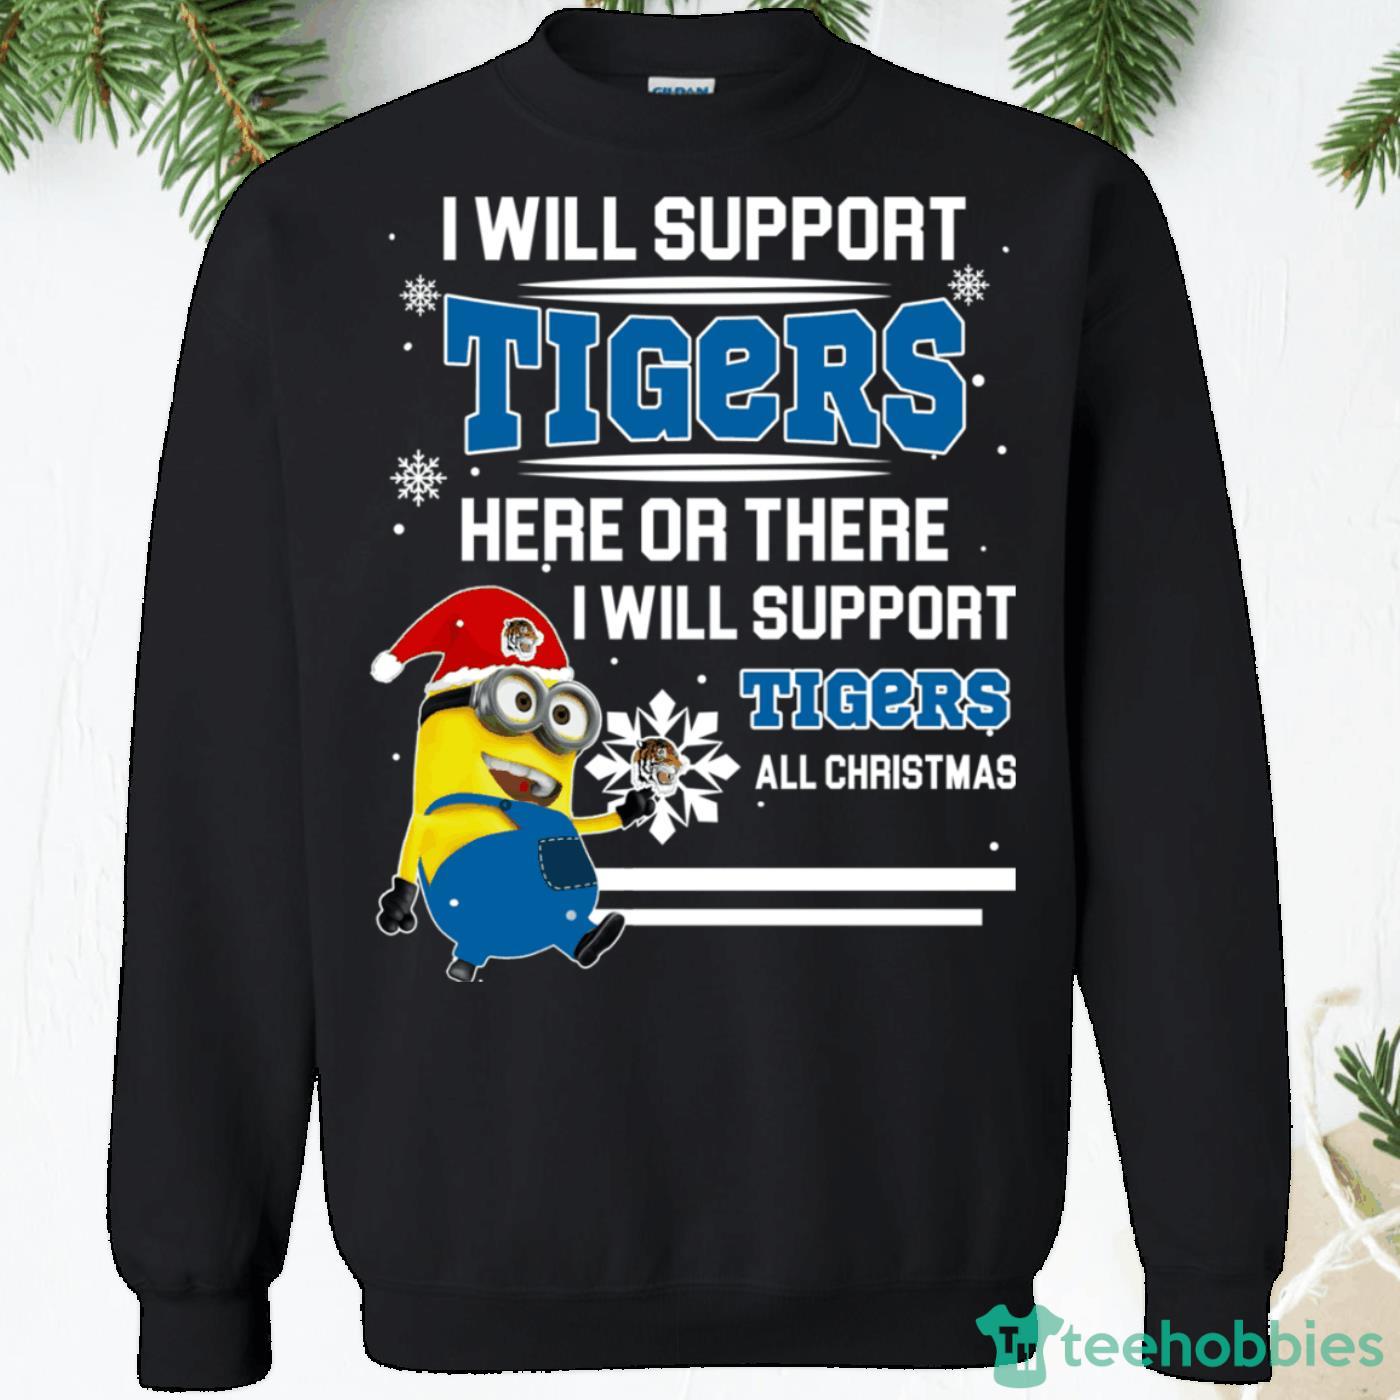 Tigers Minion Christmas Sweatshirt - tigers-minion-christmas-sweatshirt-1